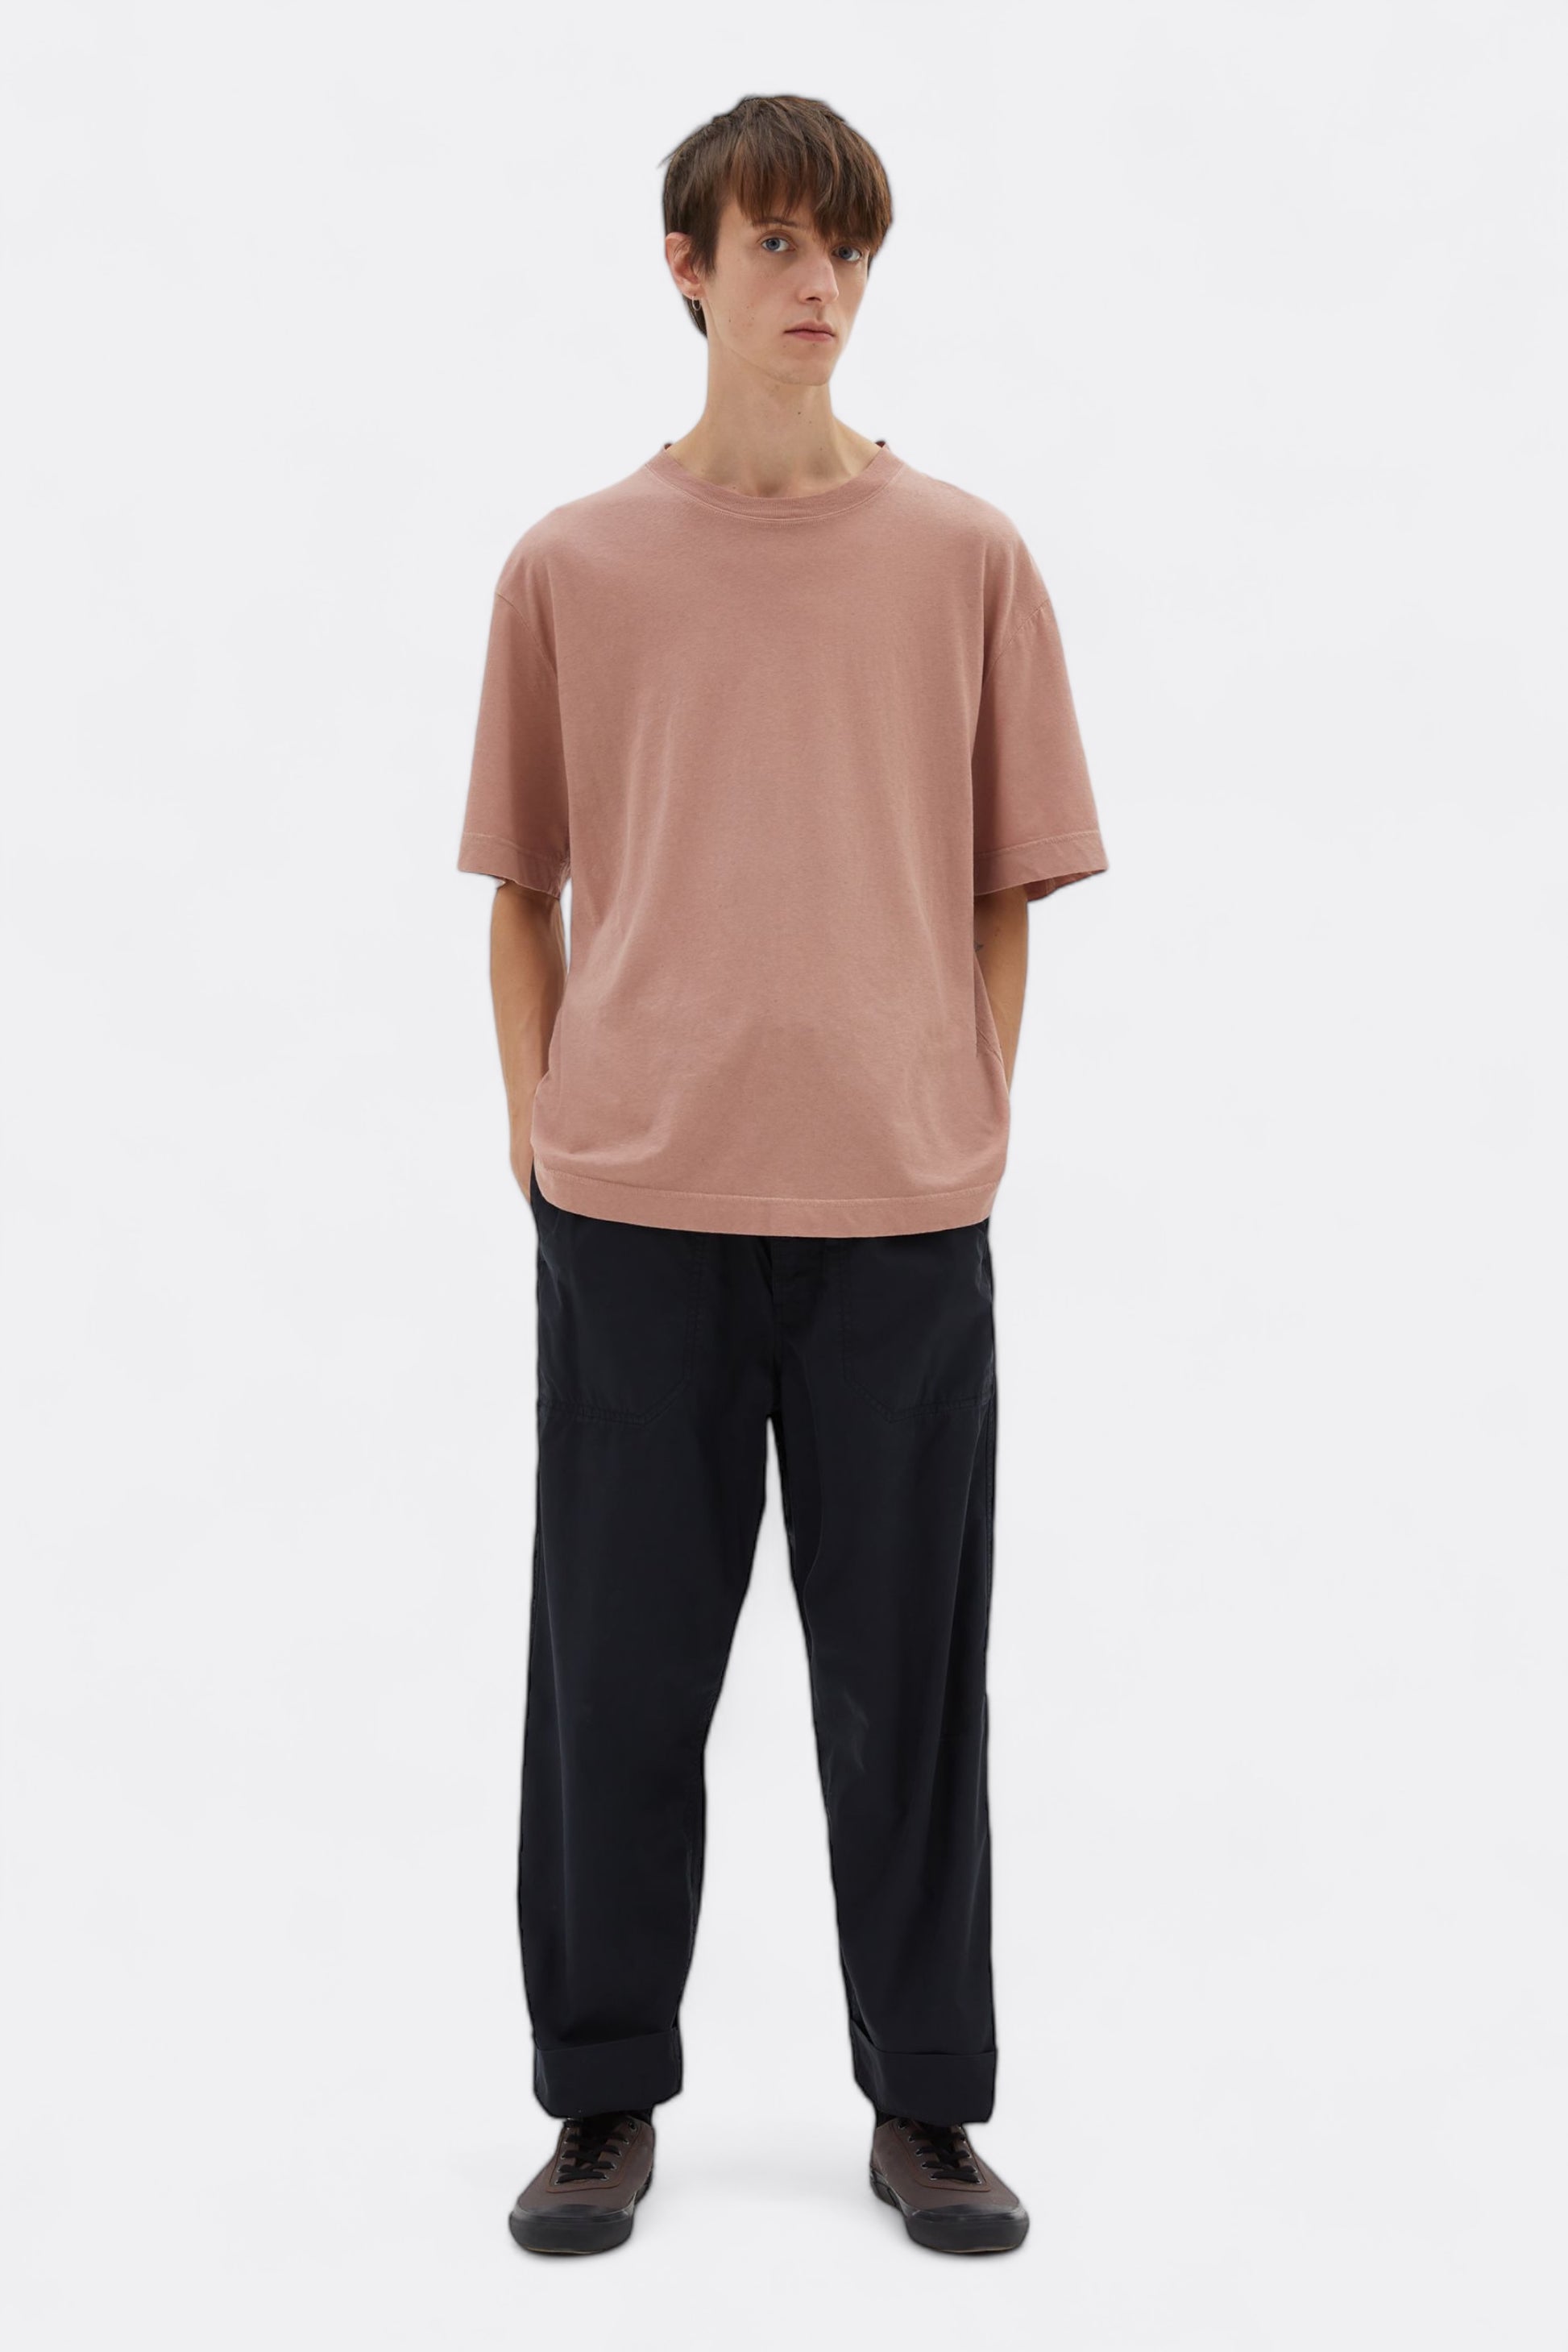 Margaret Howell - MHL. Simple T-Shirt Cotton Linen Jersey (Pale Pink)